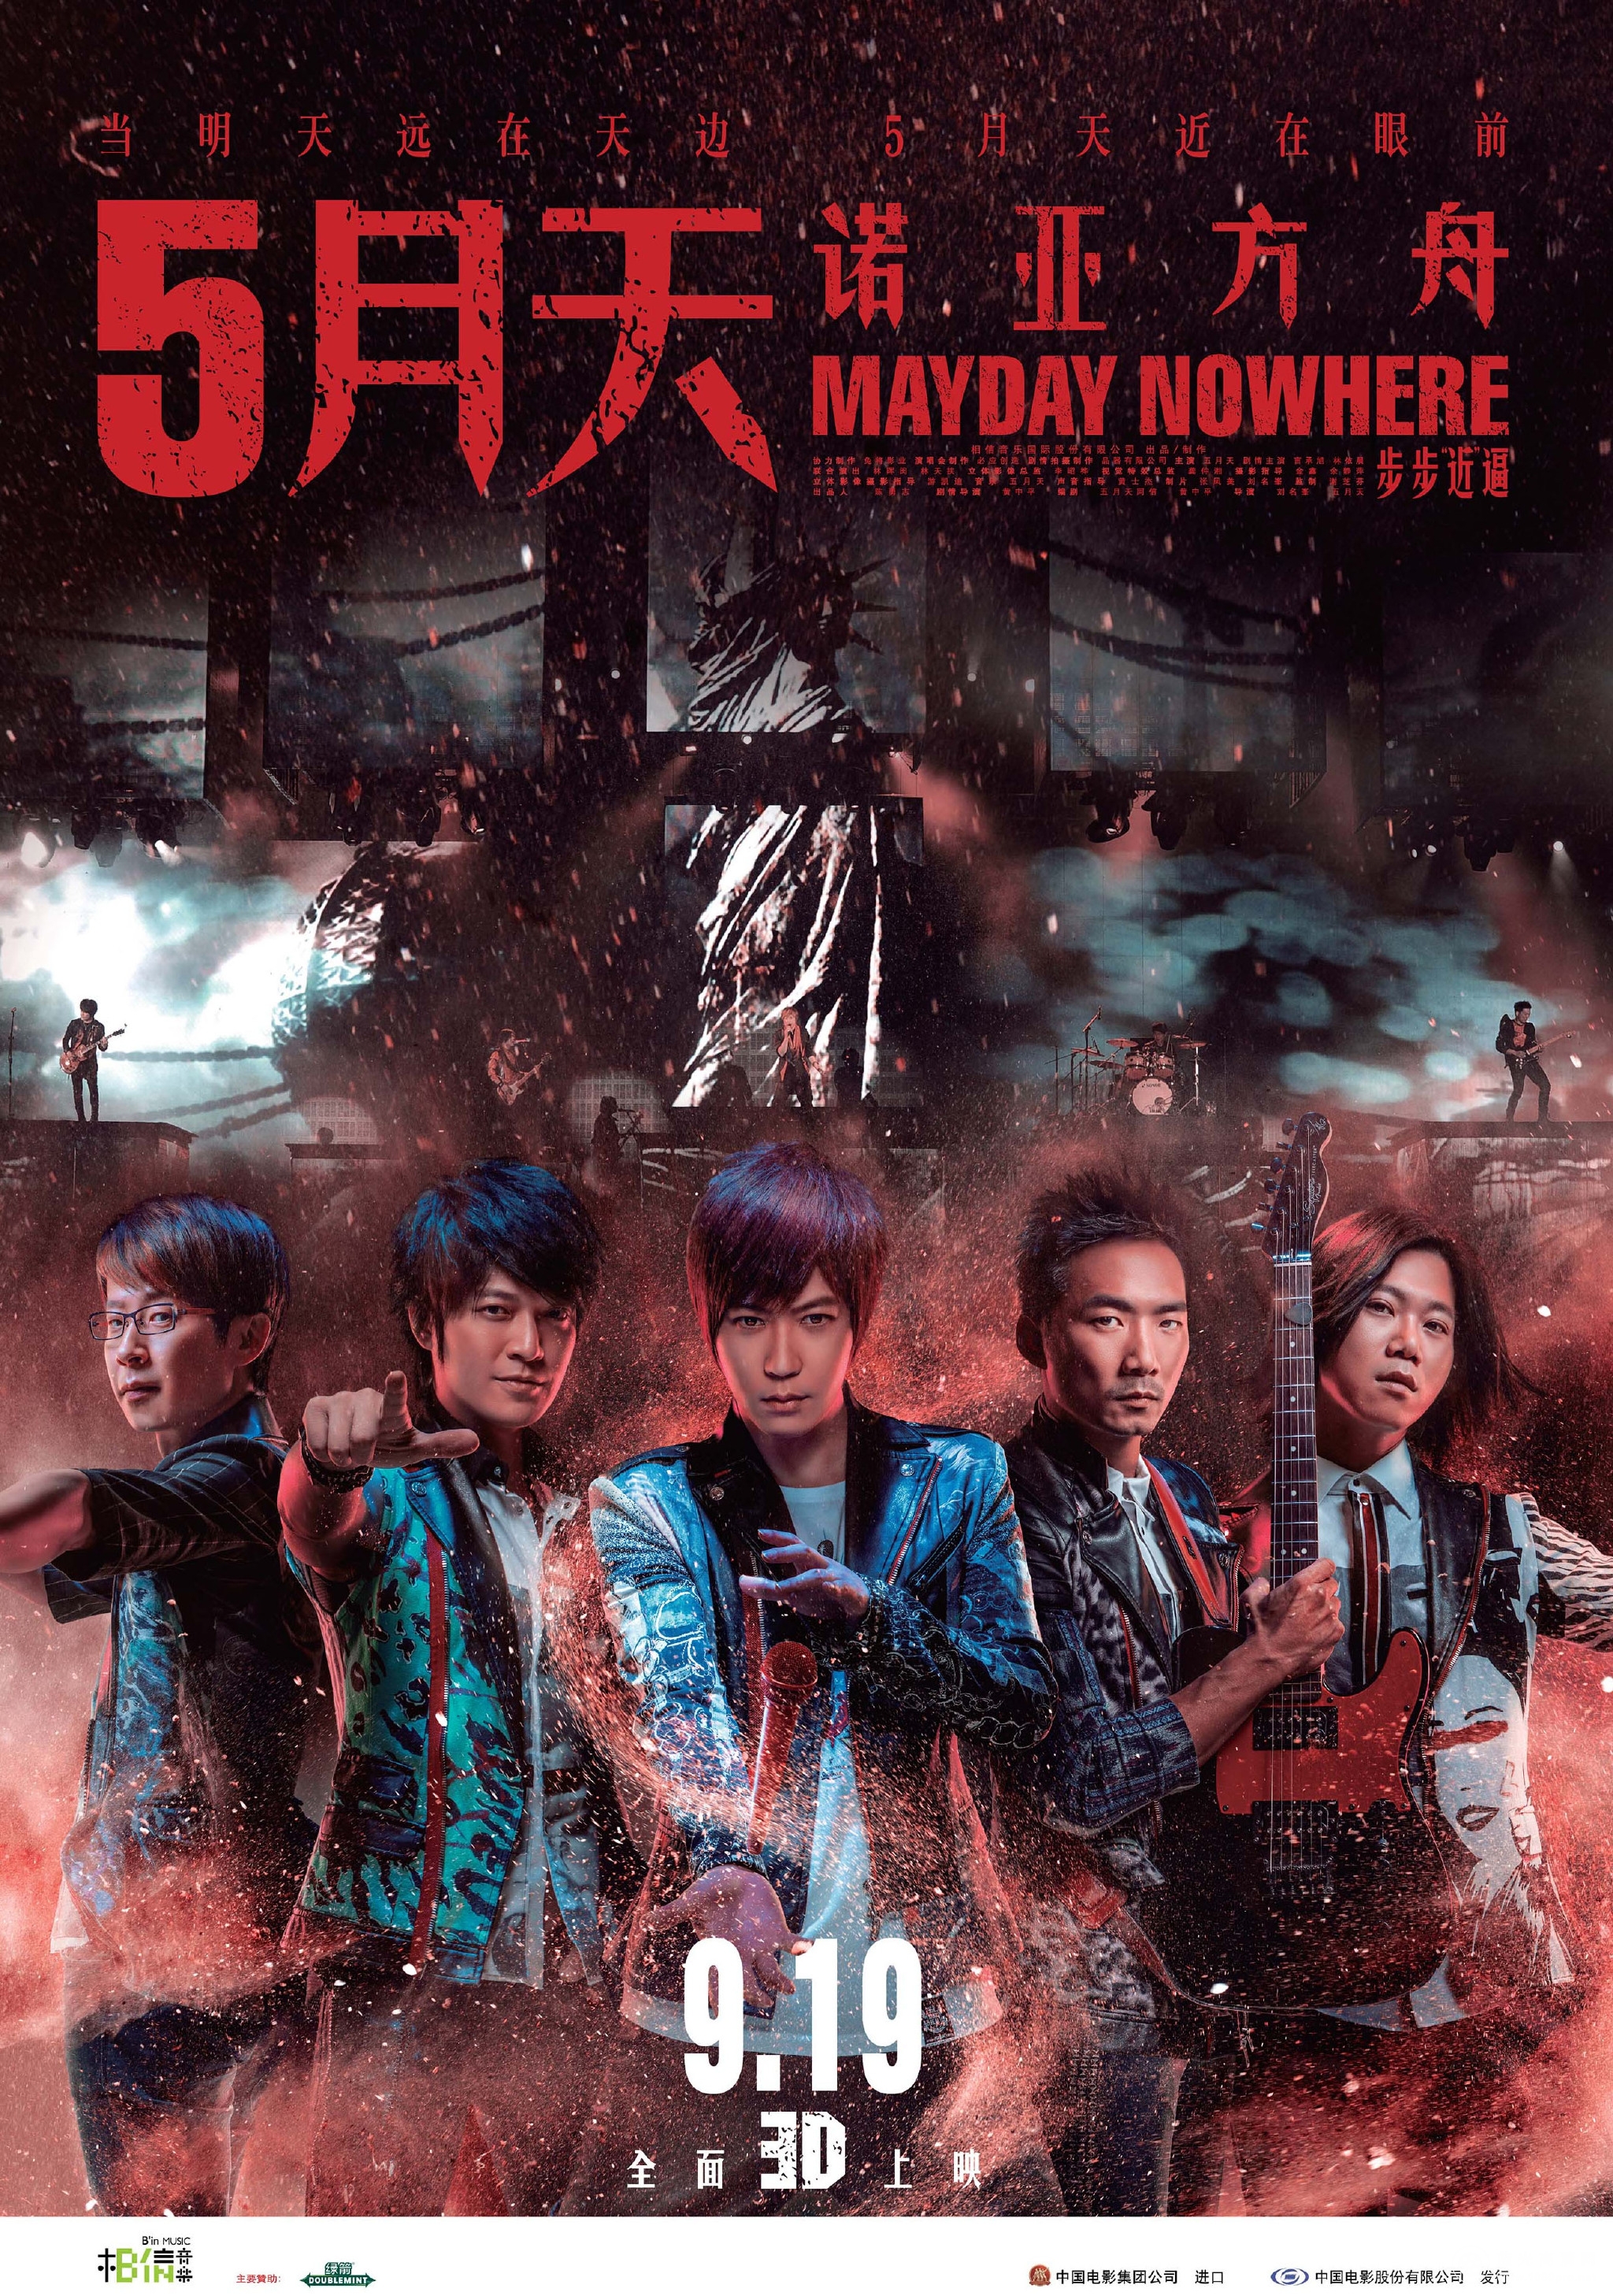 诺亚方舟/五月天诺亚方舟 MayDay.Nowheres.Movies.2013.720p.BluRay.x264-WiKi 10.10G